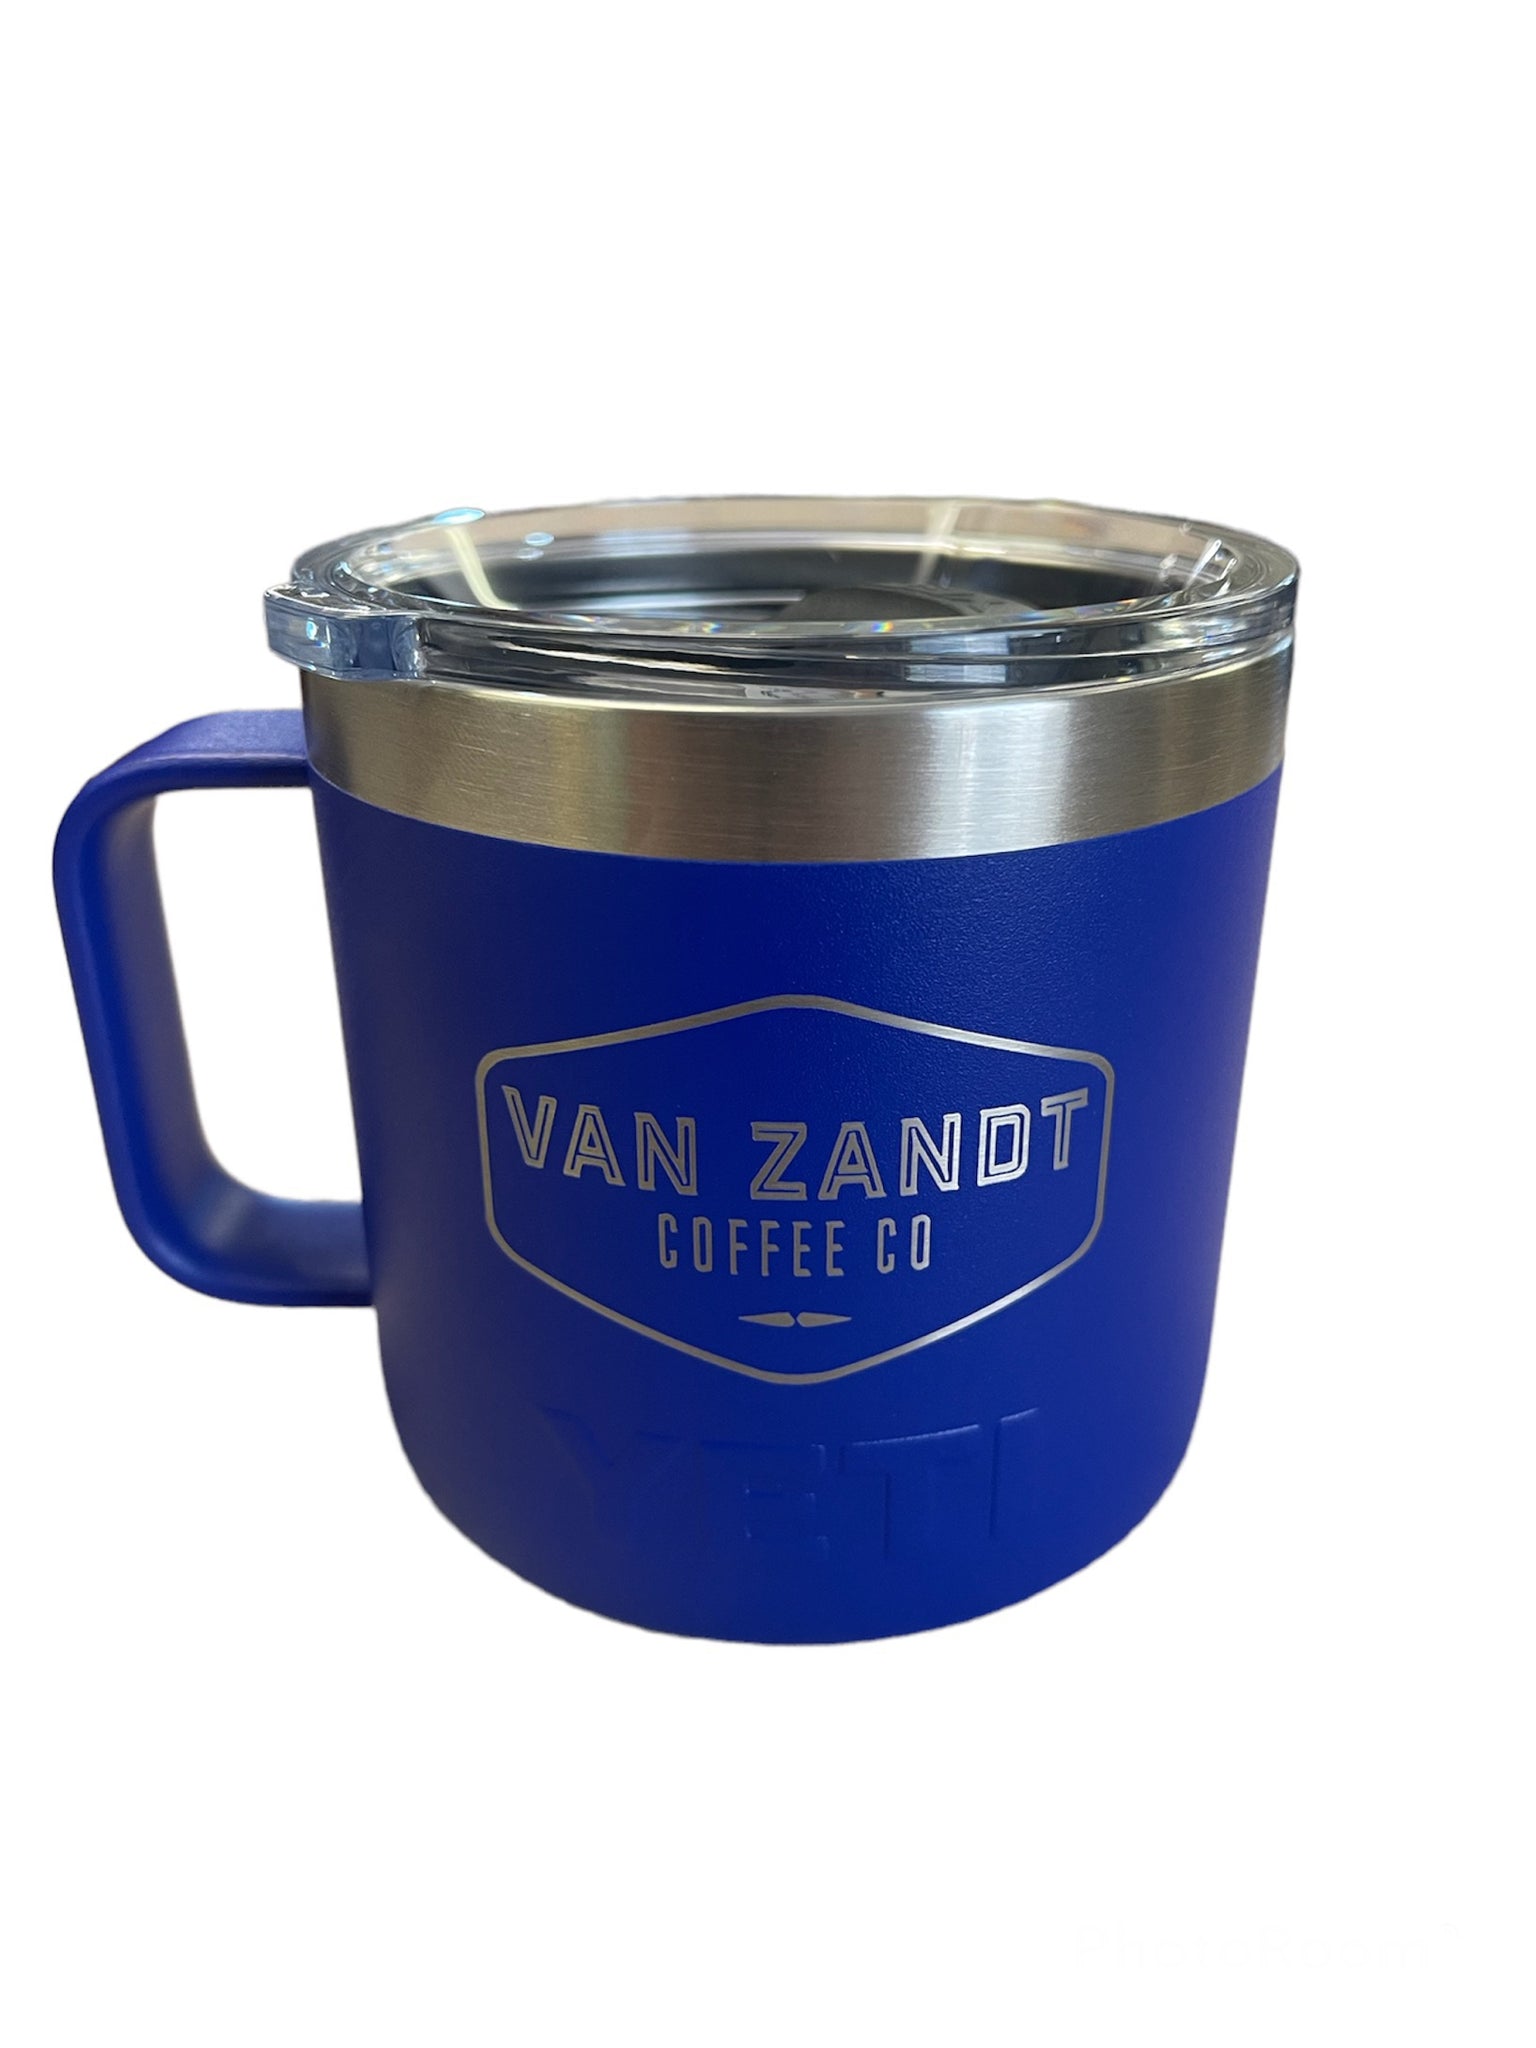 Yeti - 14 oz Rambler Mug with Magslider Lid Offshore Blue